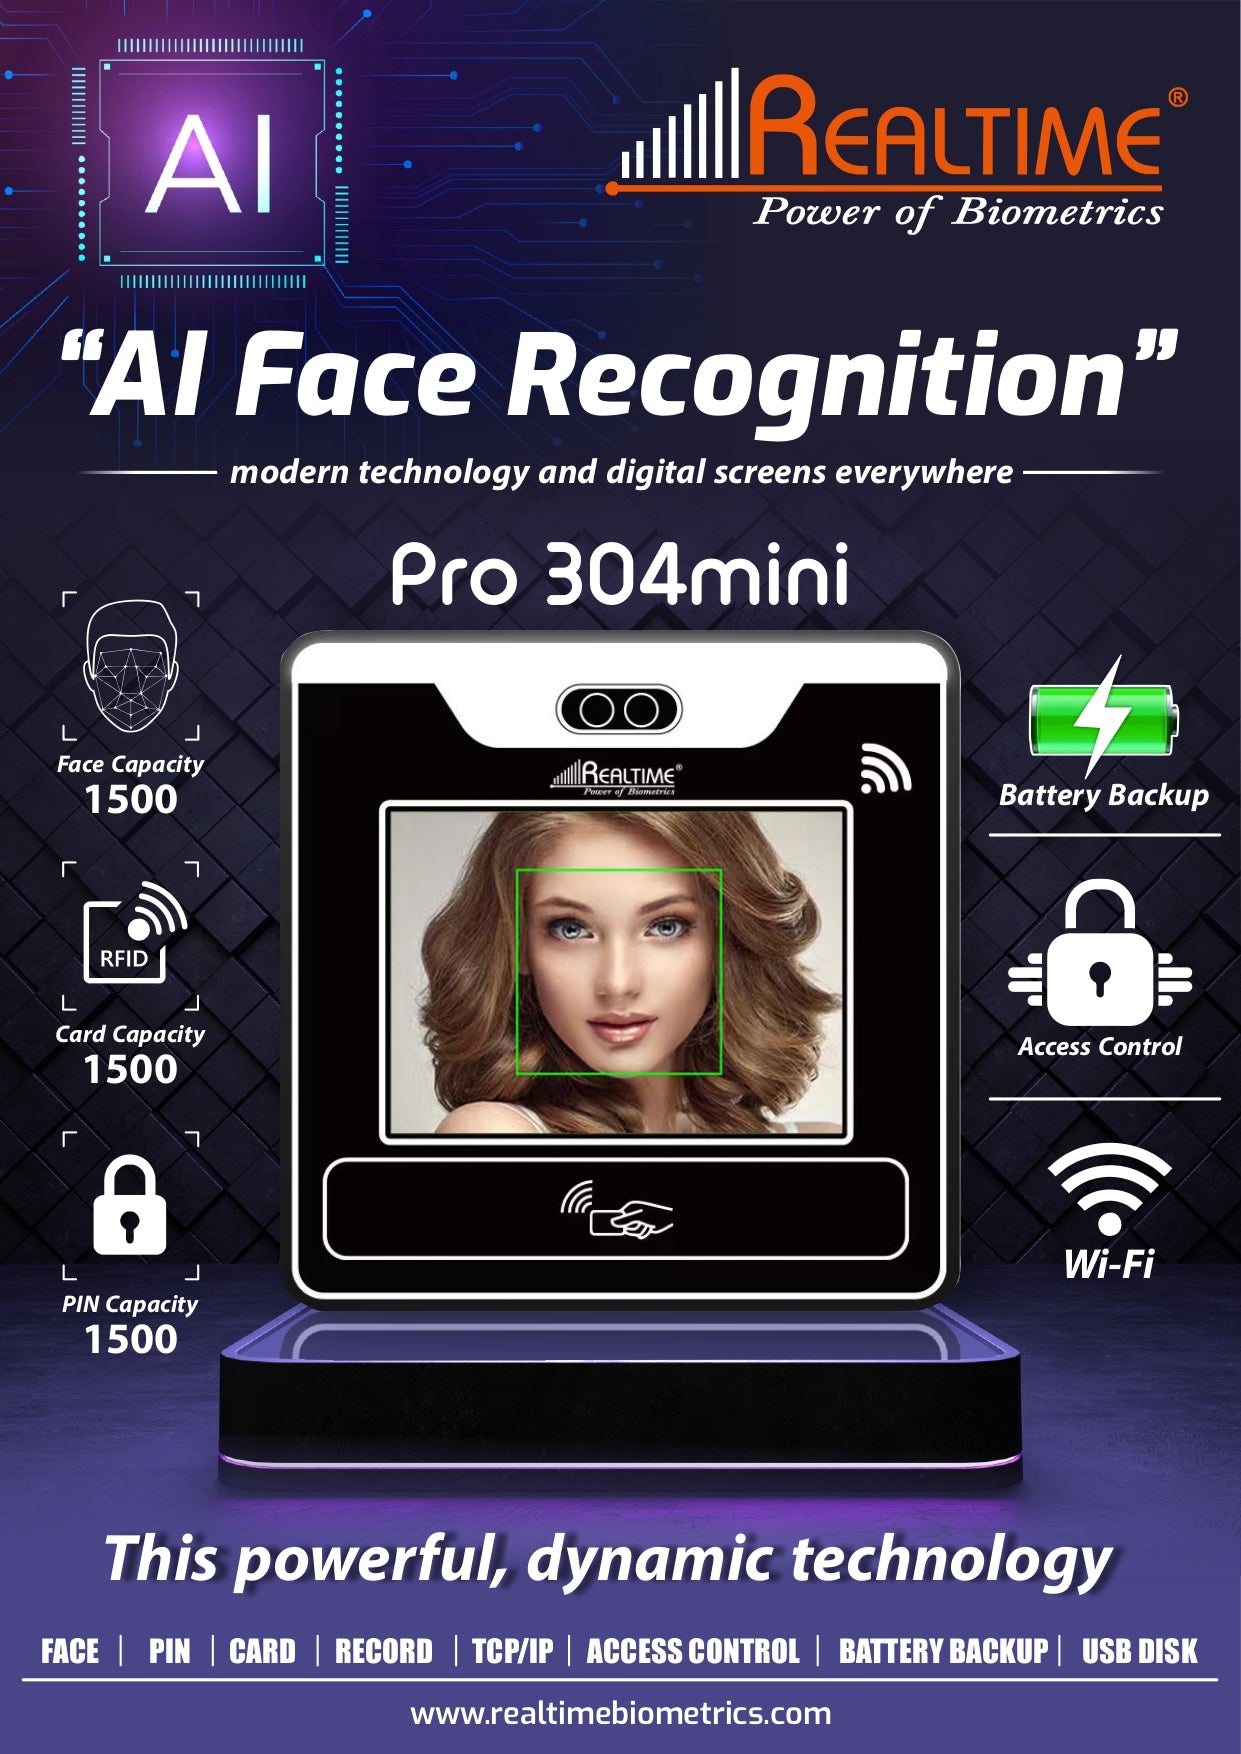 Realtime Pro304mini AI Face Recognition Attendance Access Control System